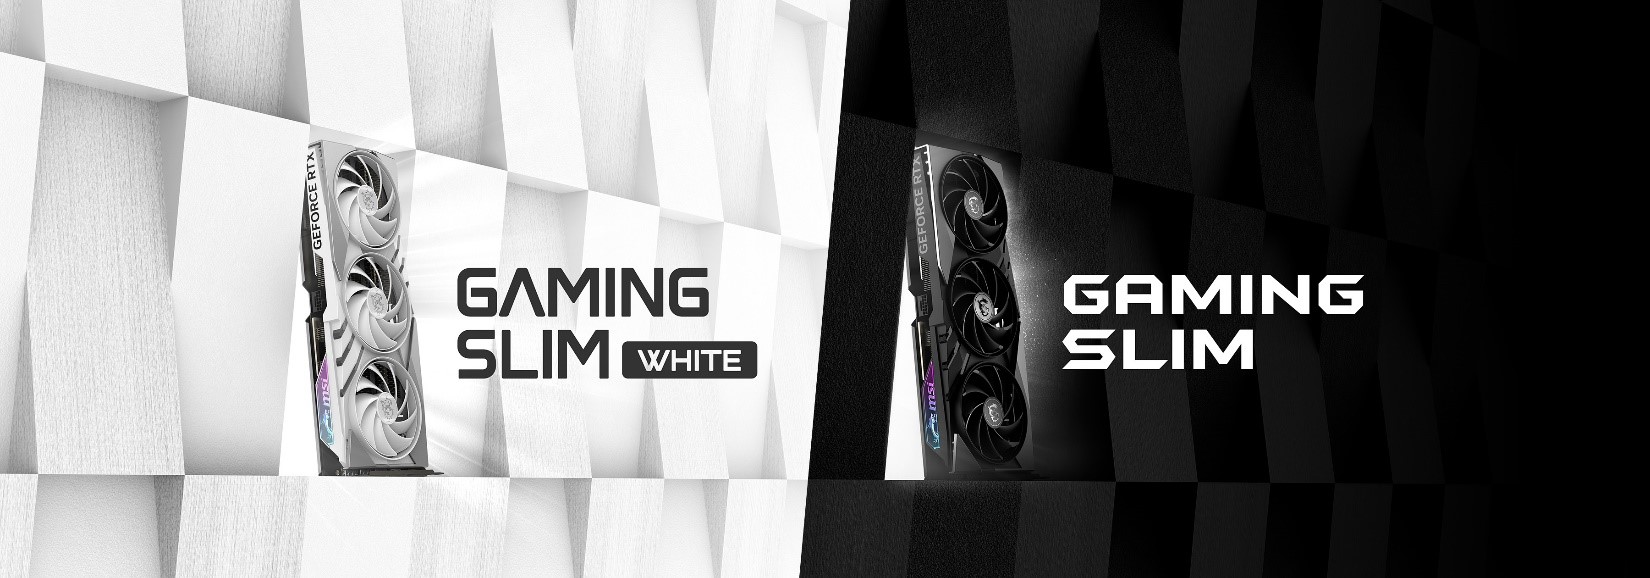 MSI GAMING SLIM 系列顯示卡 提供黑色及白色版本